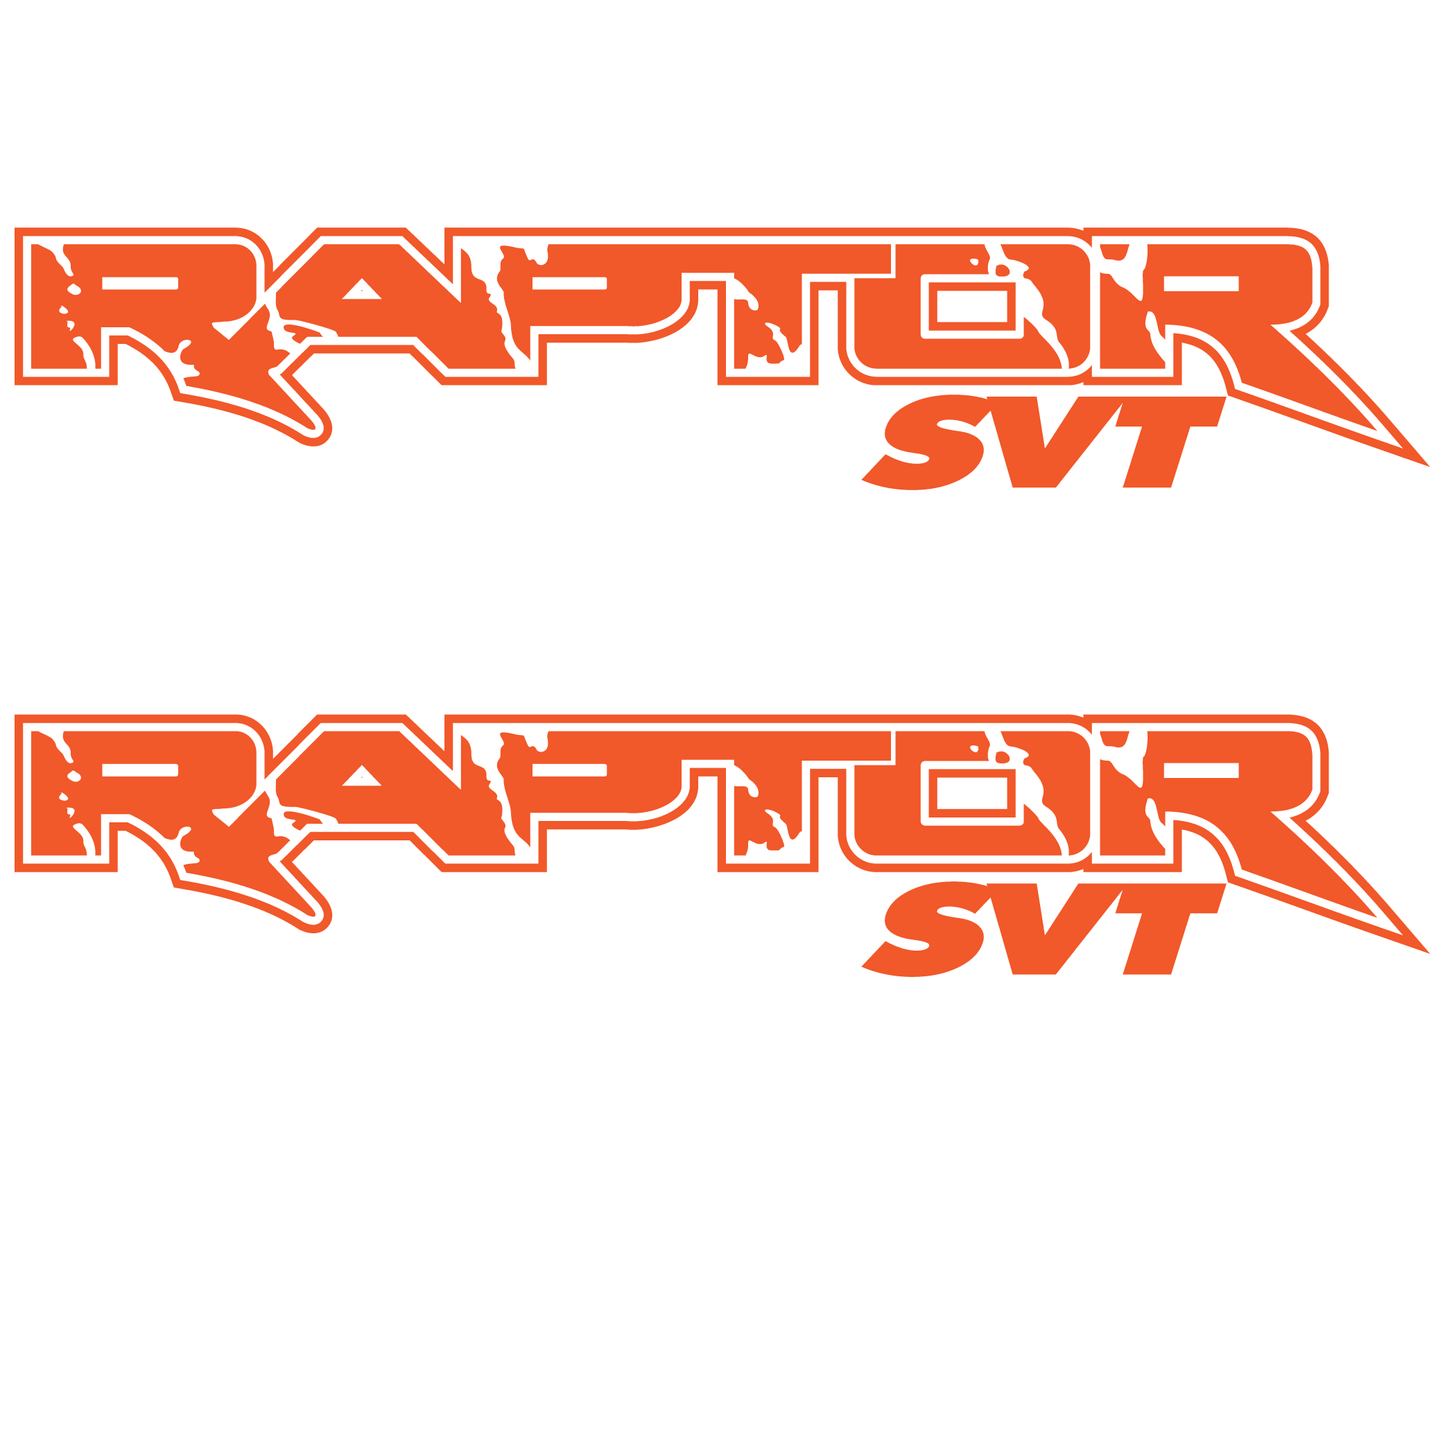 Shop Vinyl Design F-150 Raptor SVT Replacement Bedside Decals #010 Vehicle Decal Orange Gloss Shop Vinyl Design decals stickers